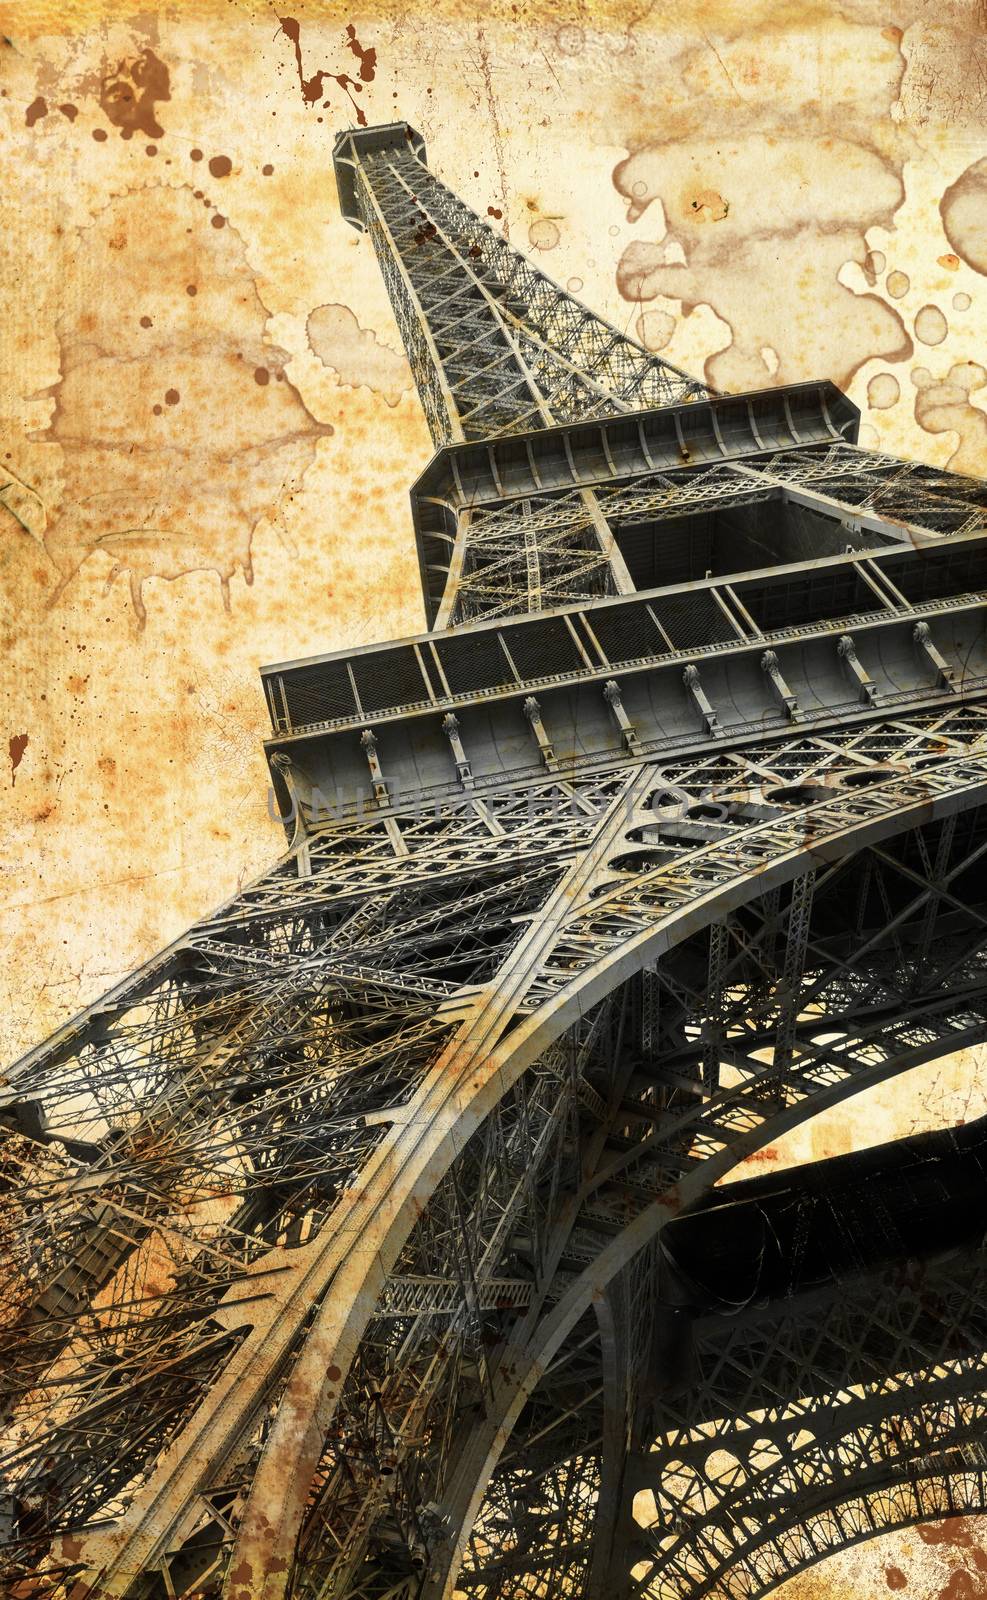 old postcard of Eiffel Tower